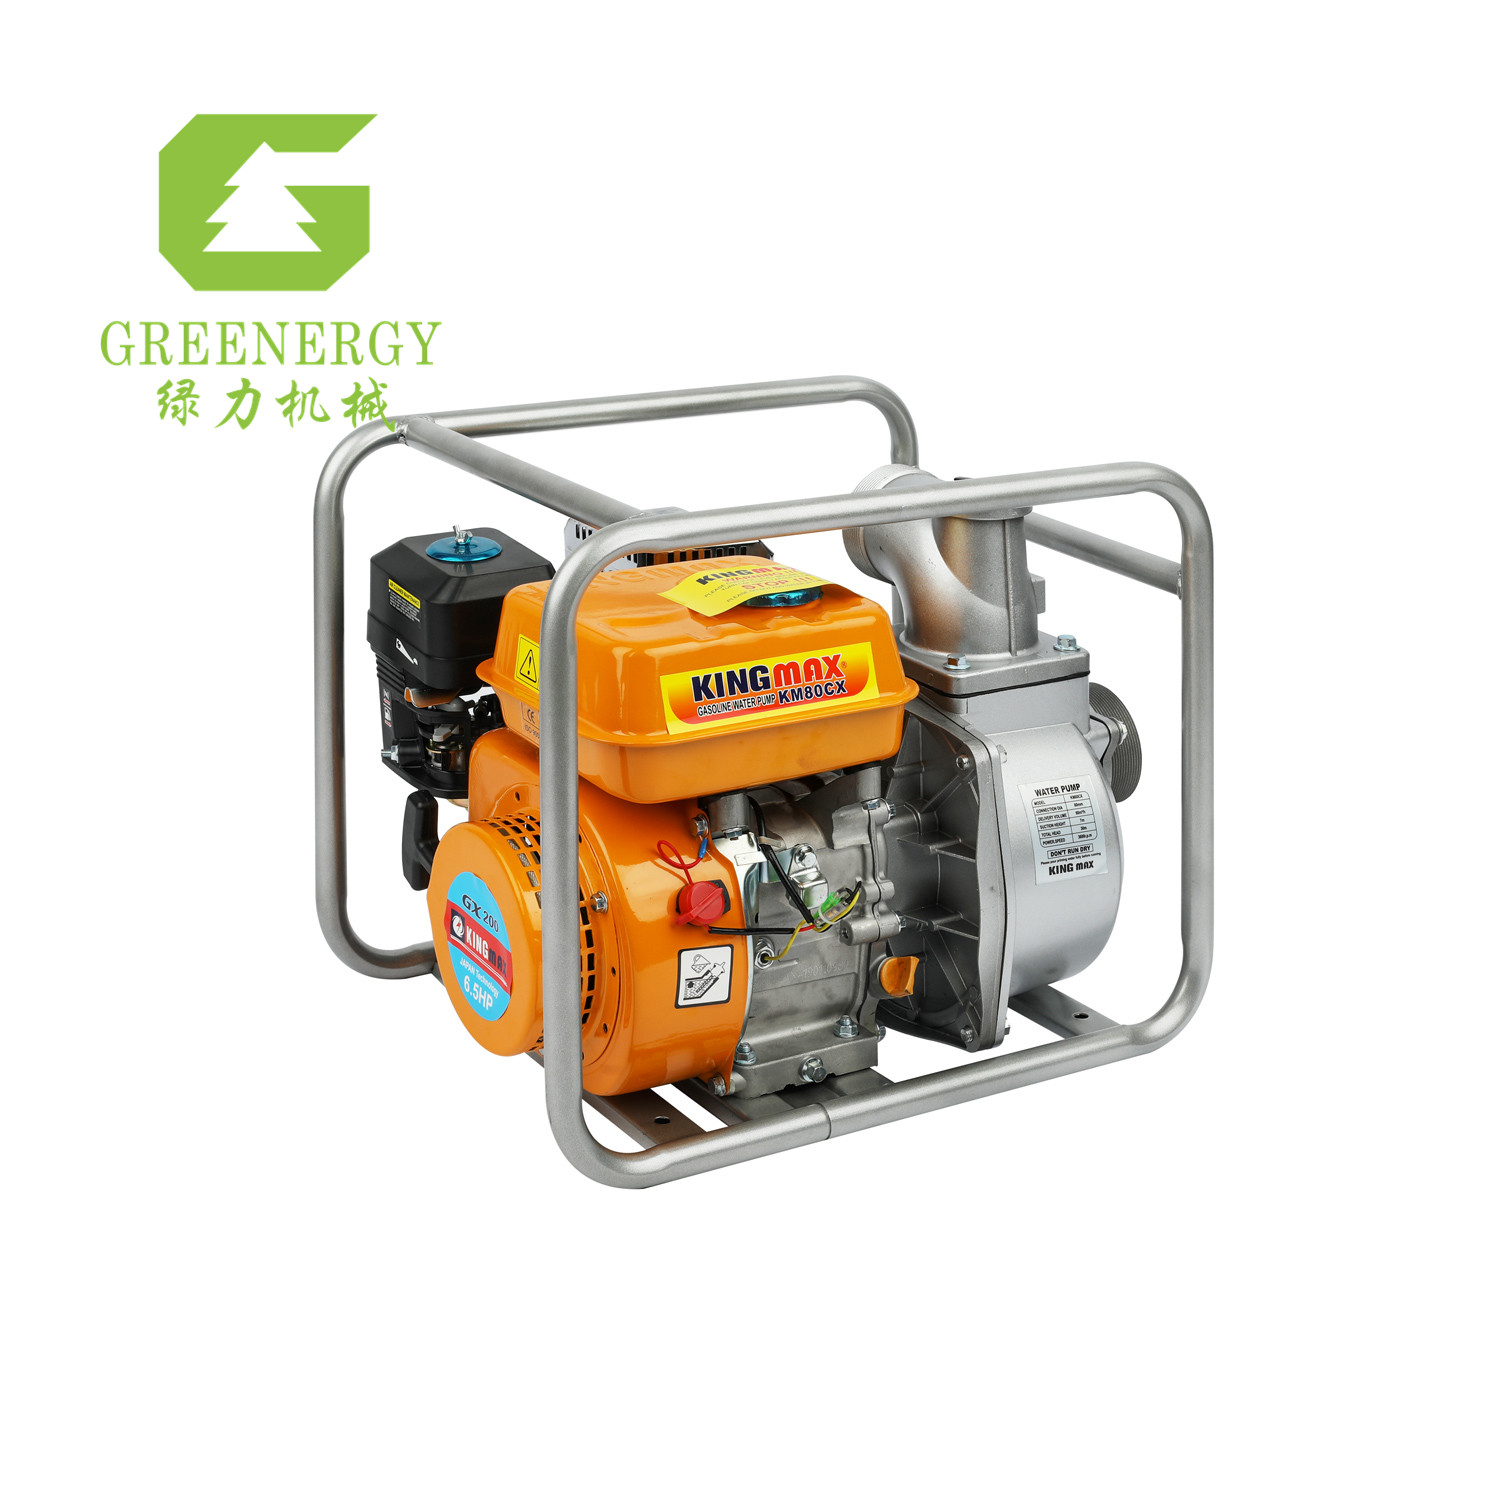 3inch Gasoline Water Pump Km80cx Zhejiang Green Power Machinery Incorporated Co., Ltd